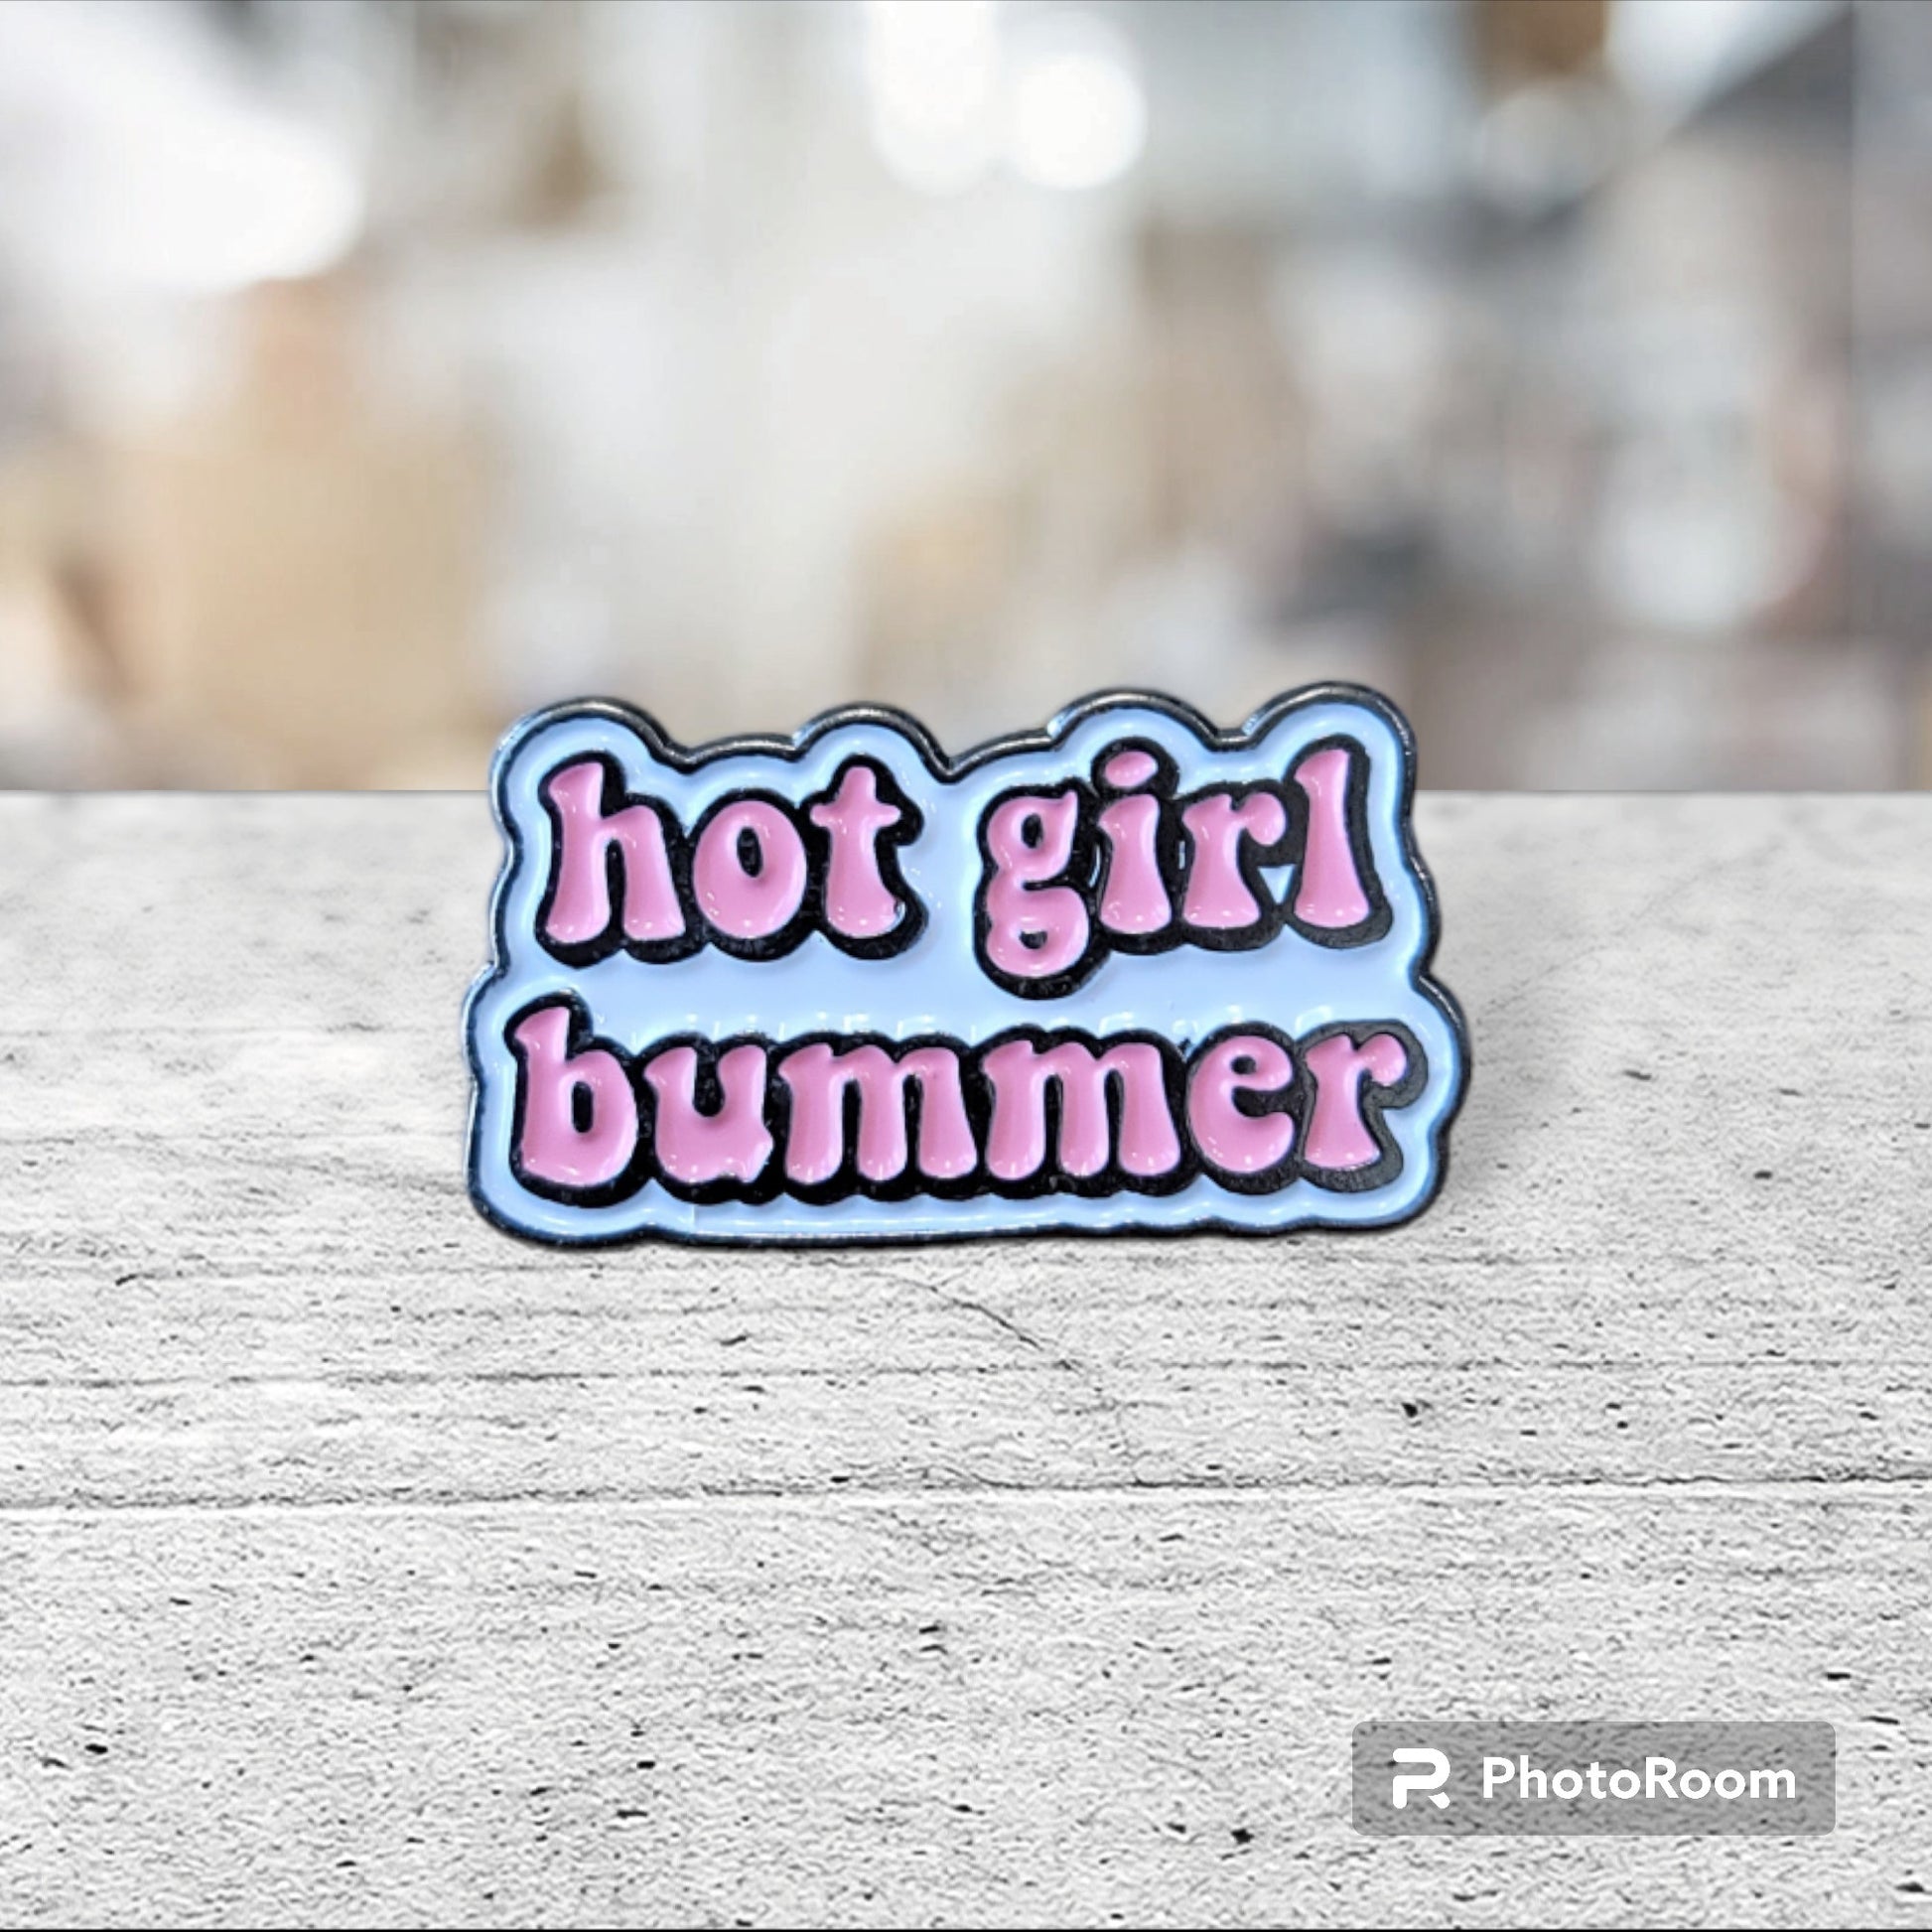 Hot Girl Bummer Pin